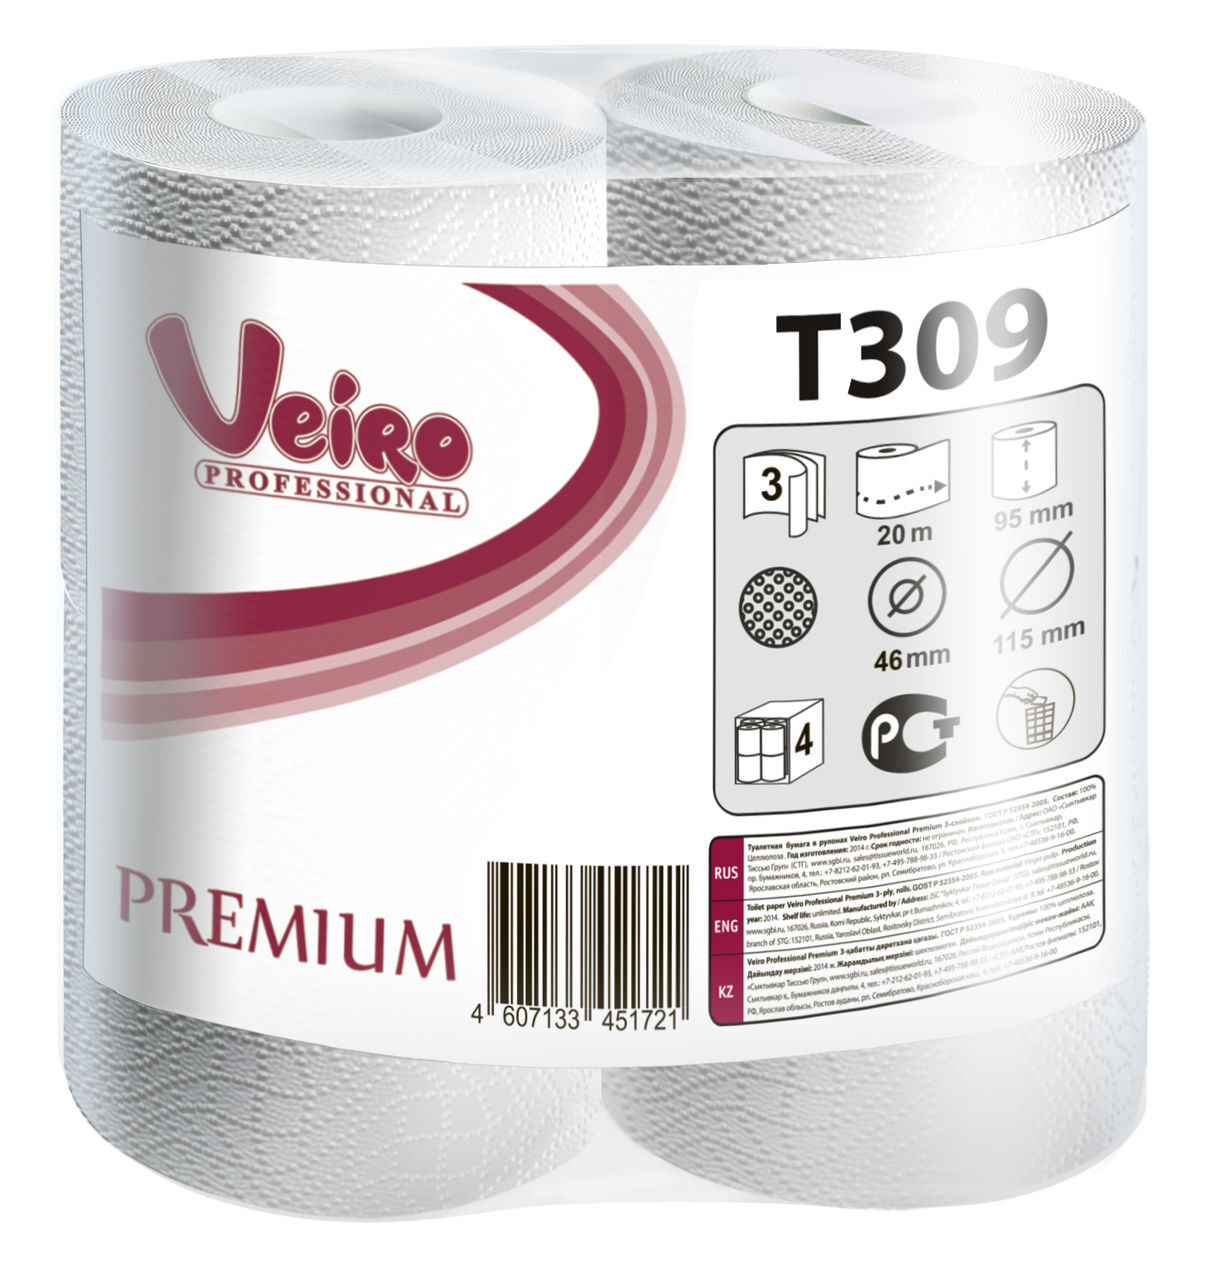 Veiro Professional Premium T309 Туалетная бумага трехслойная 46x115 мм